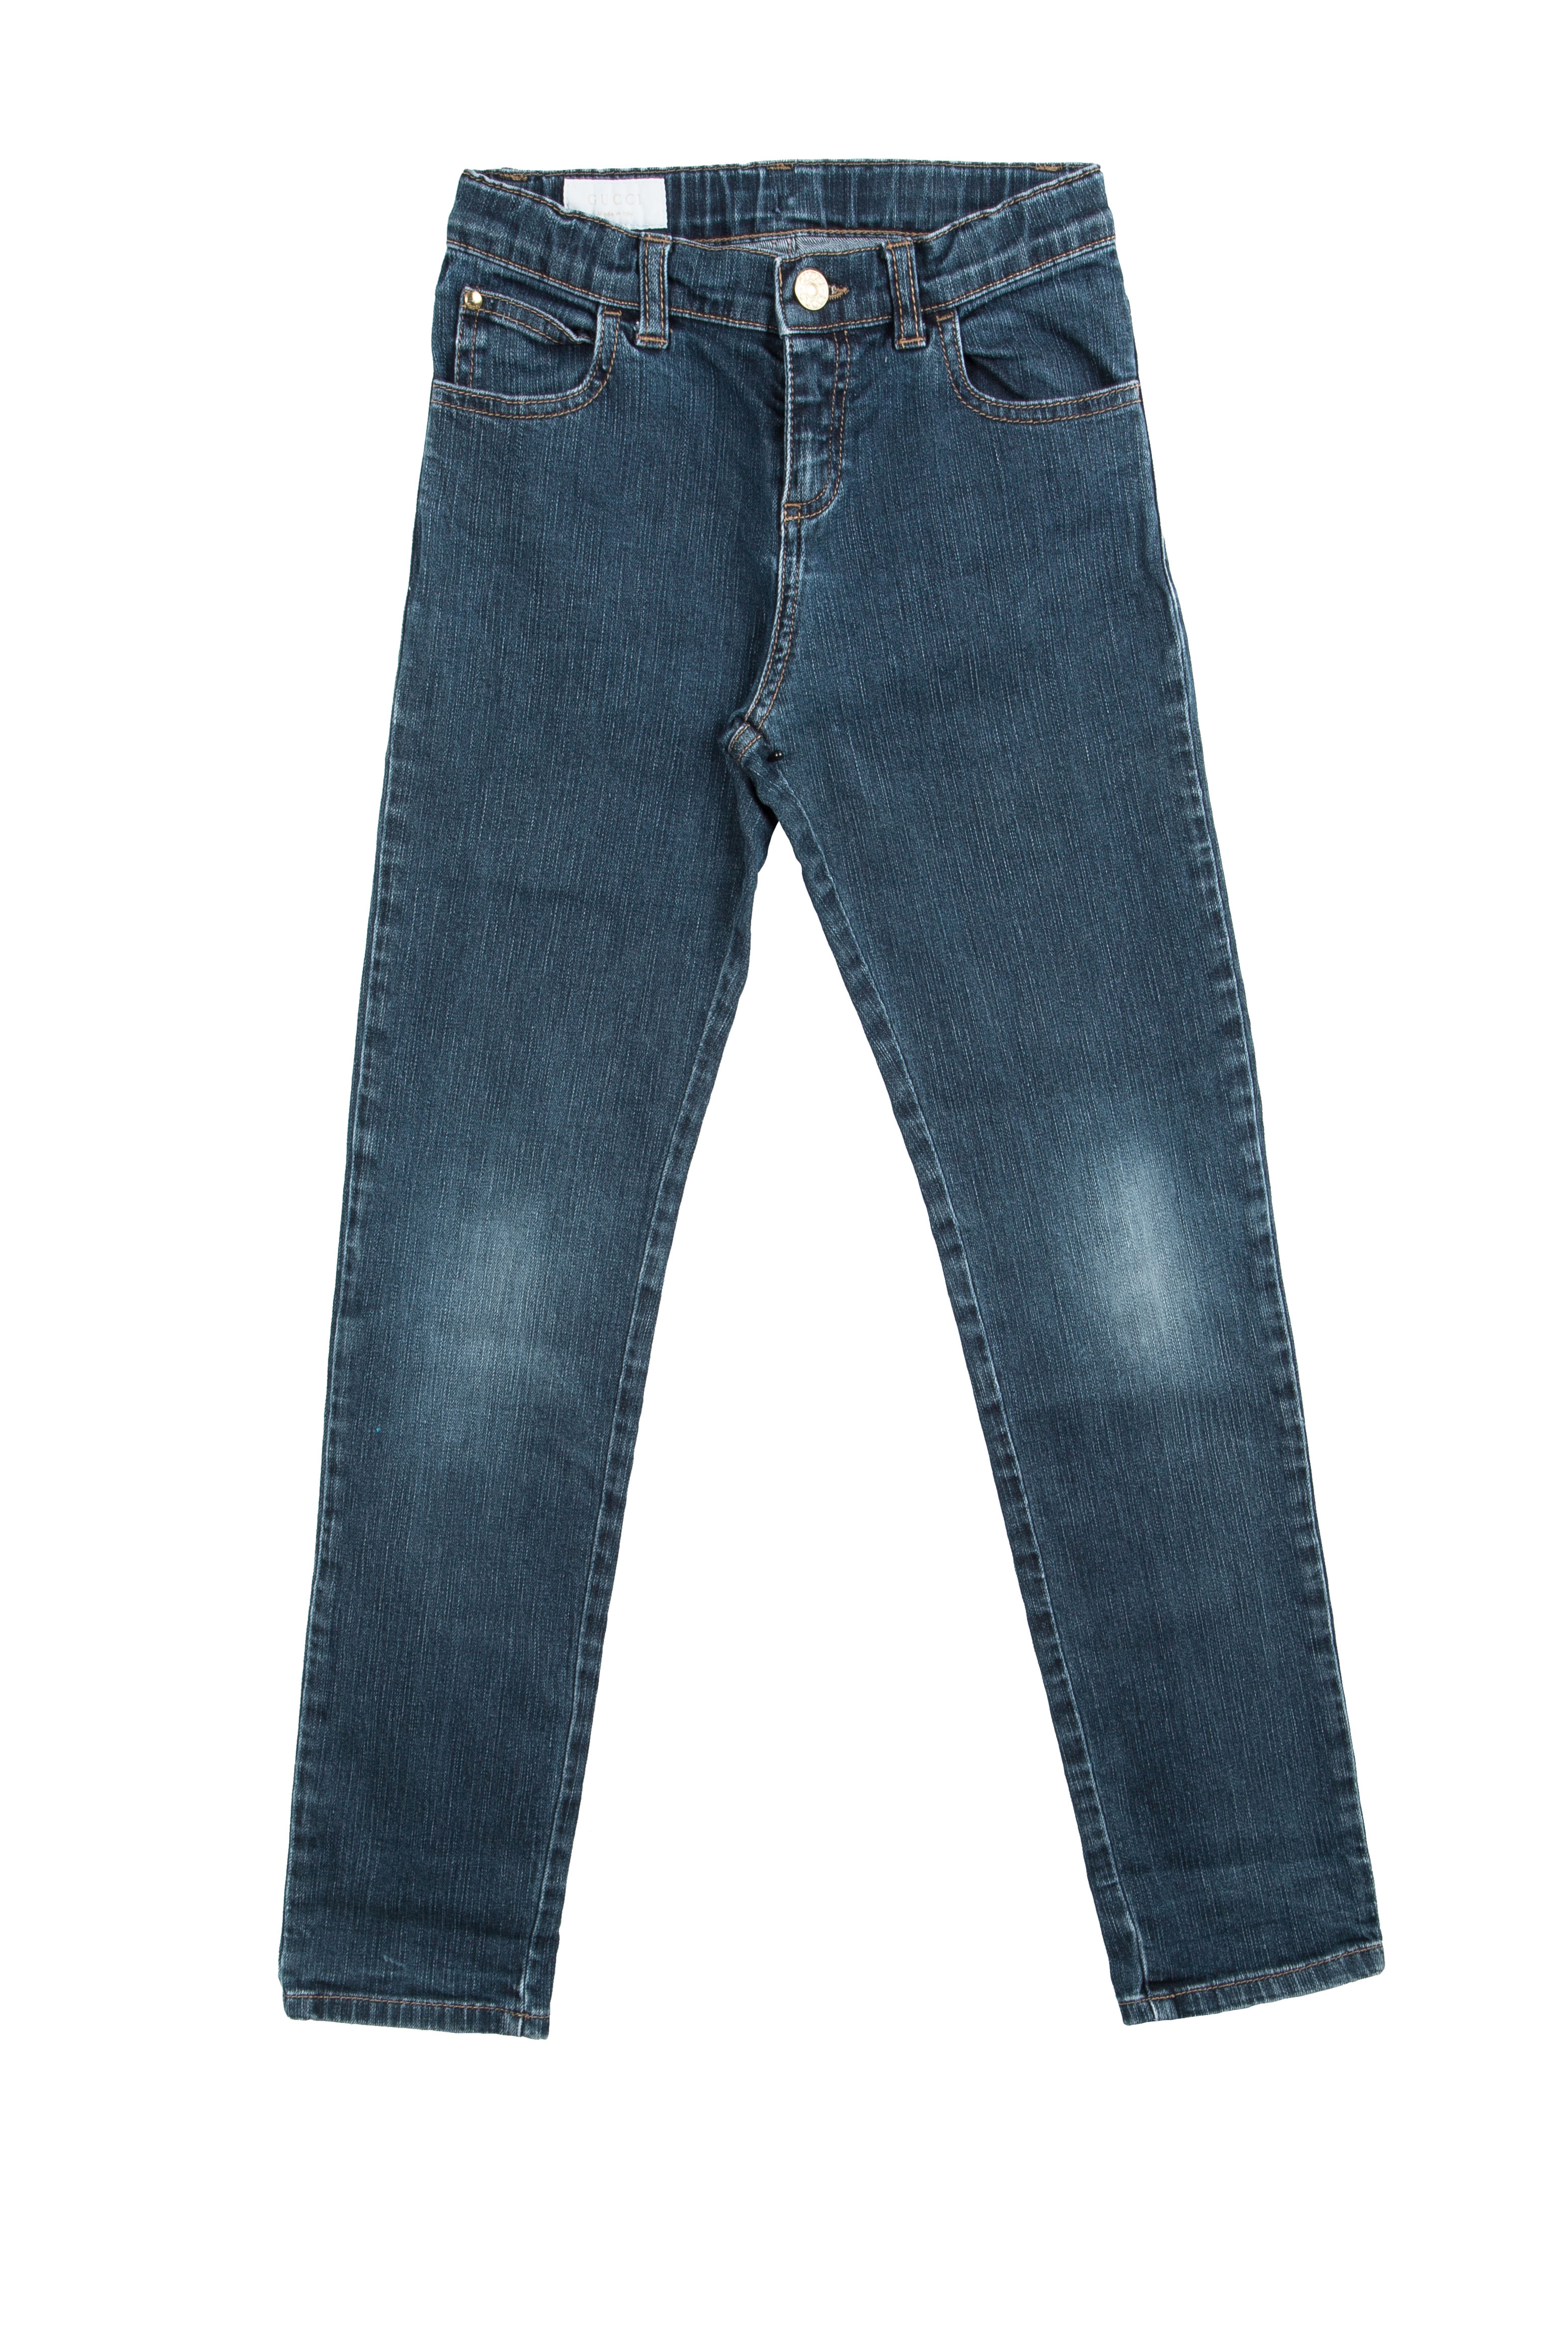 Gucci Indigo Dark Wash Denim Faded Effect High Waist Jeans 8 Yrs